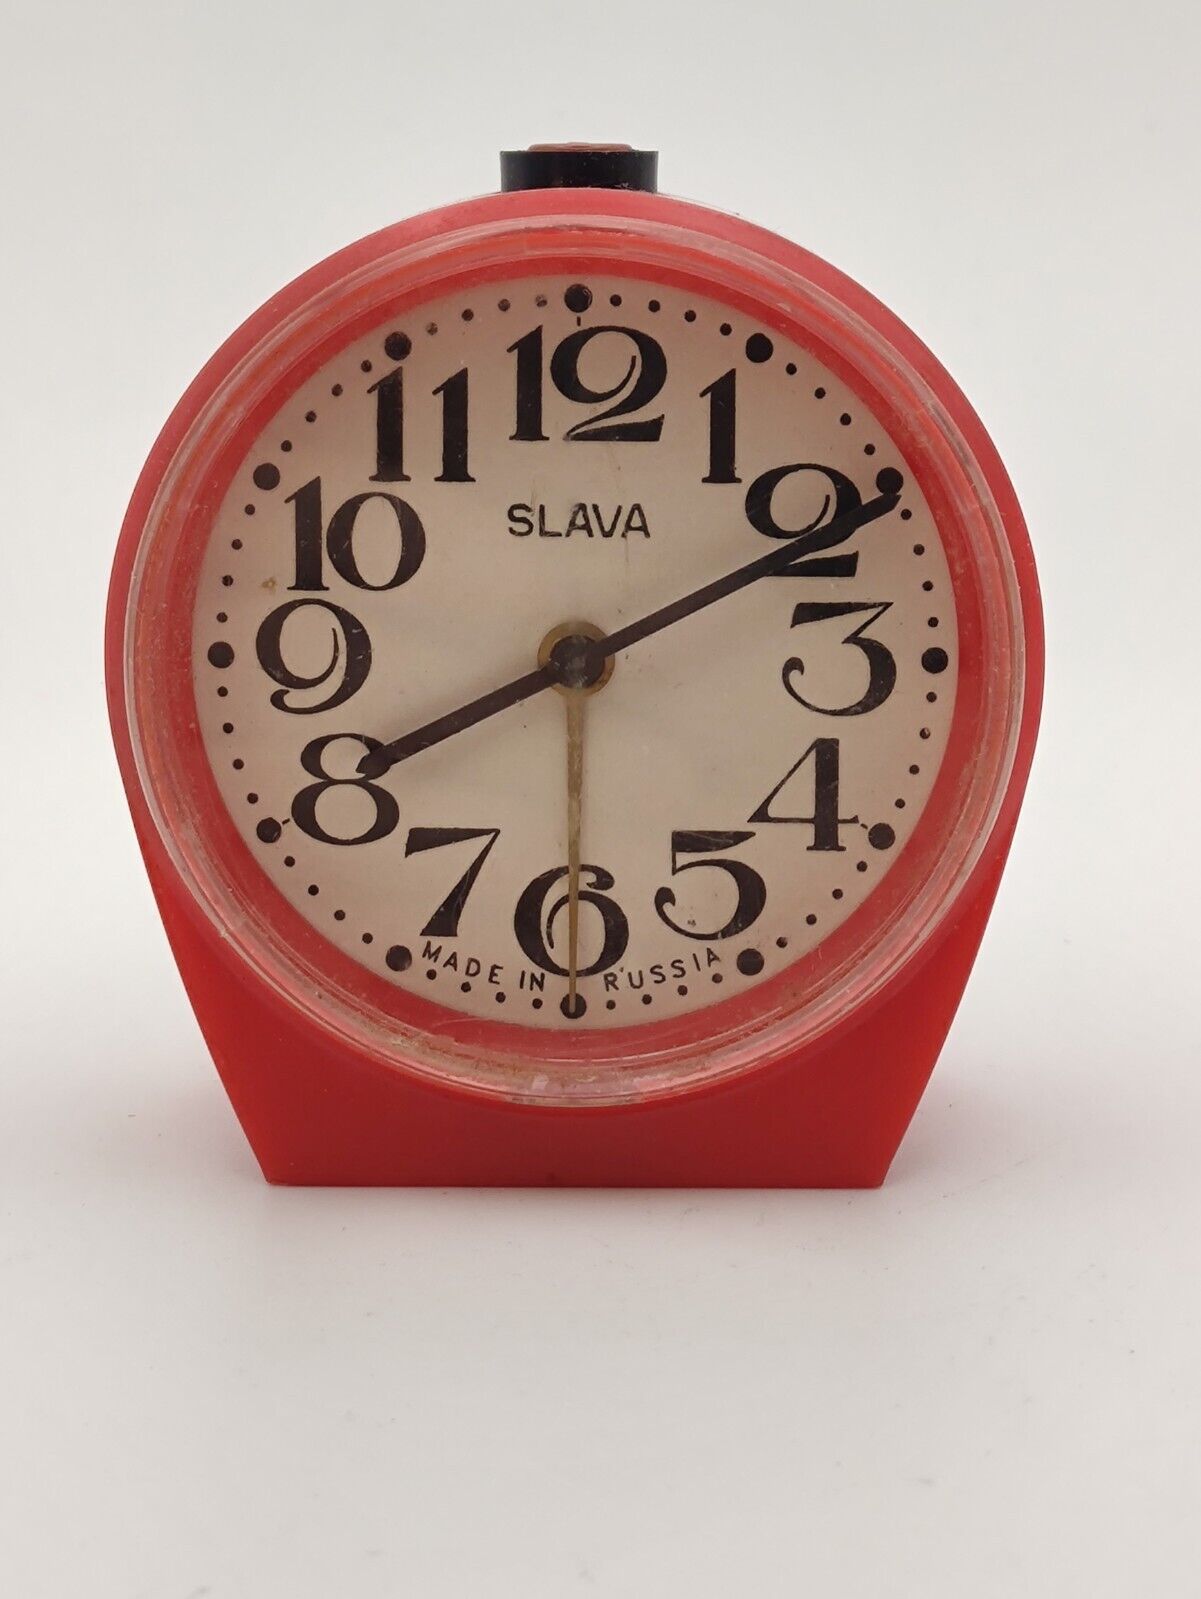 Vintage Alarm Clock Slava Plastic Case Mechanical